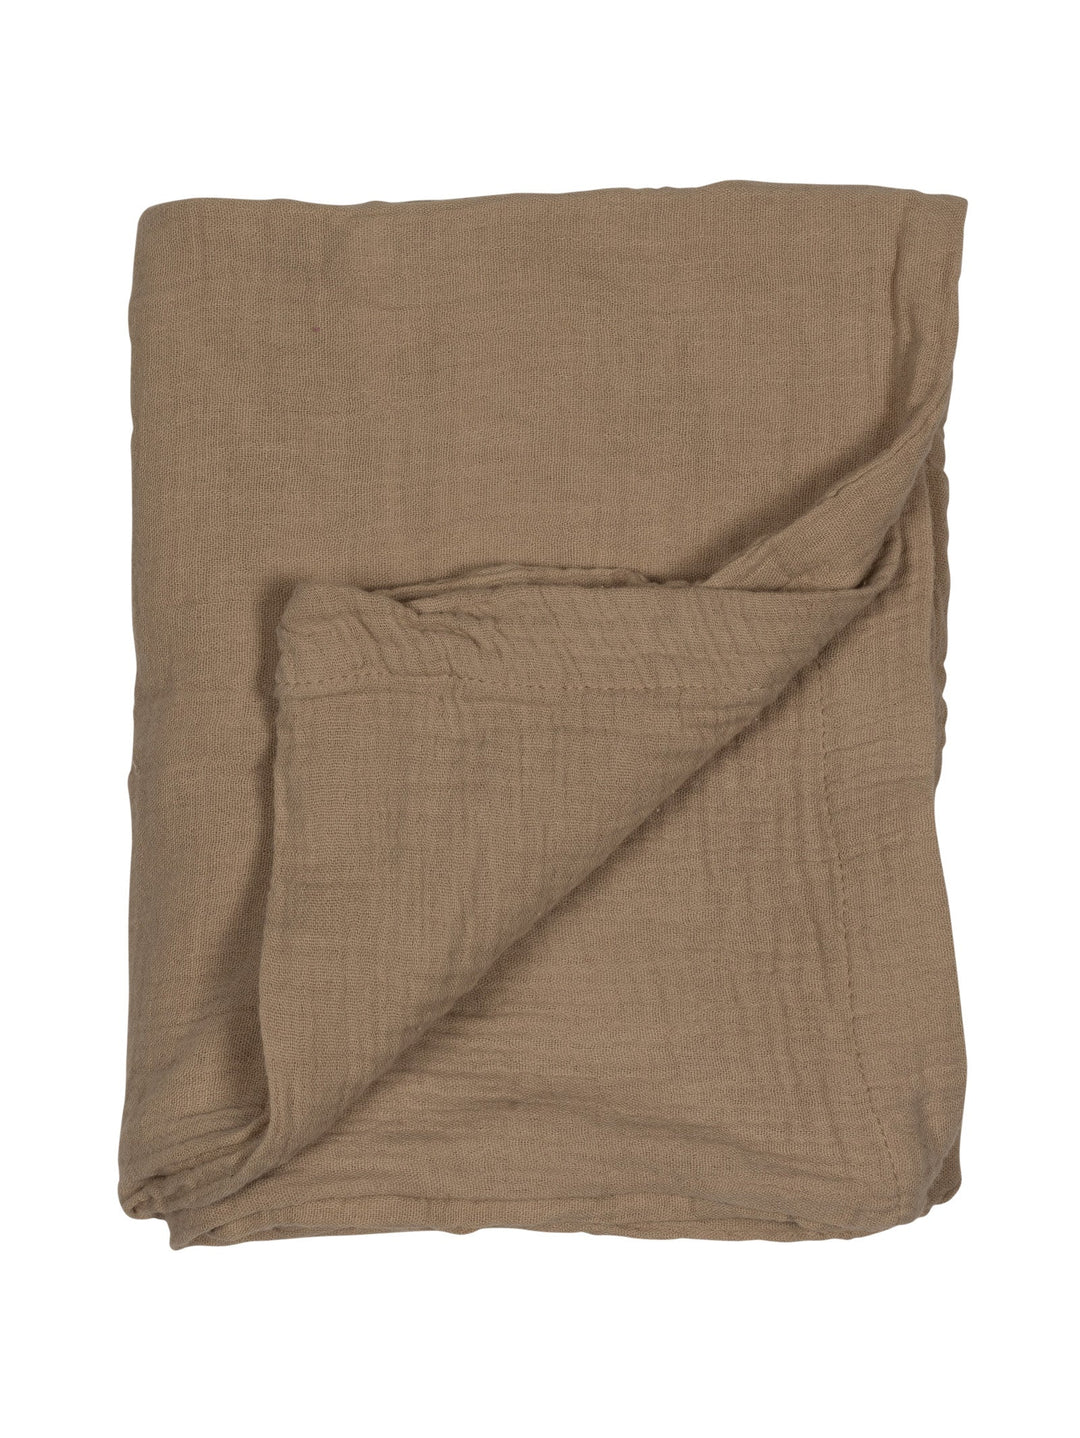 Whisper Pillowcase Set of 2 in Wheat - pillowcase- Hertex Haus Online - bed & bath